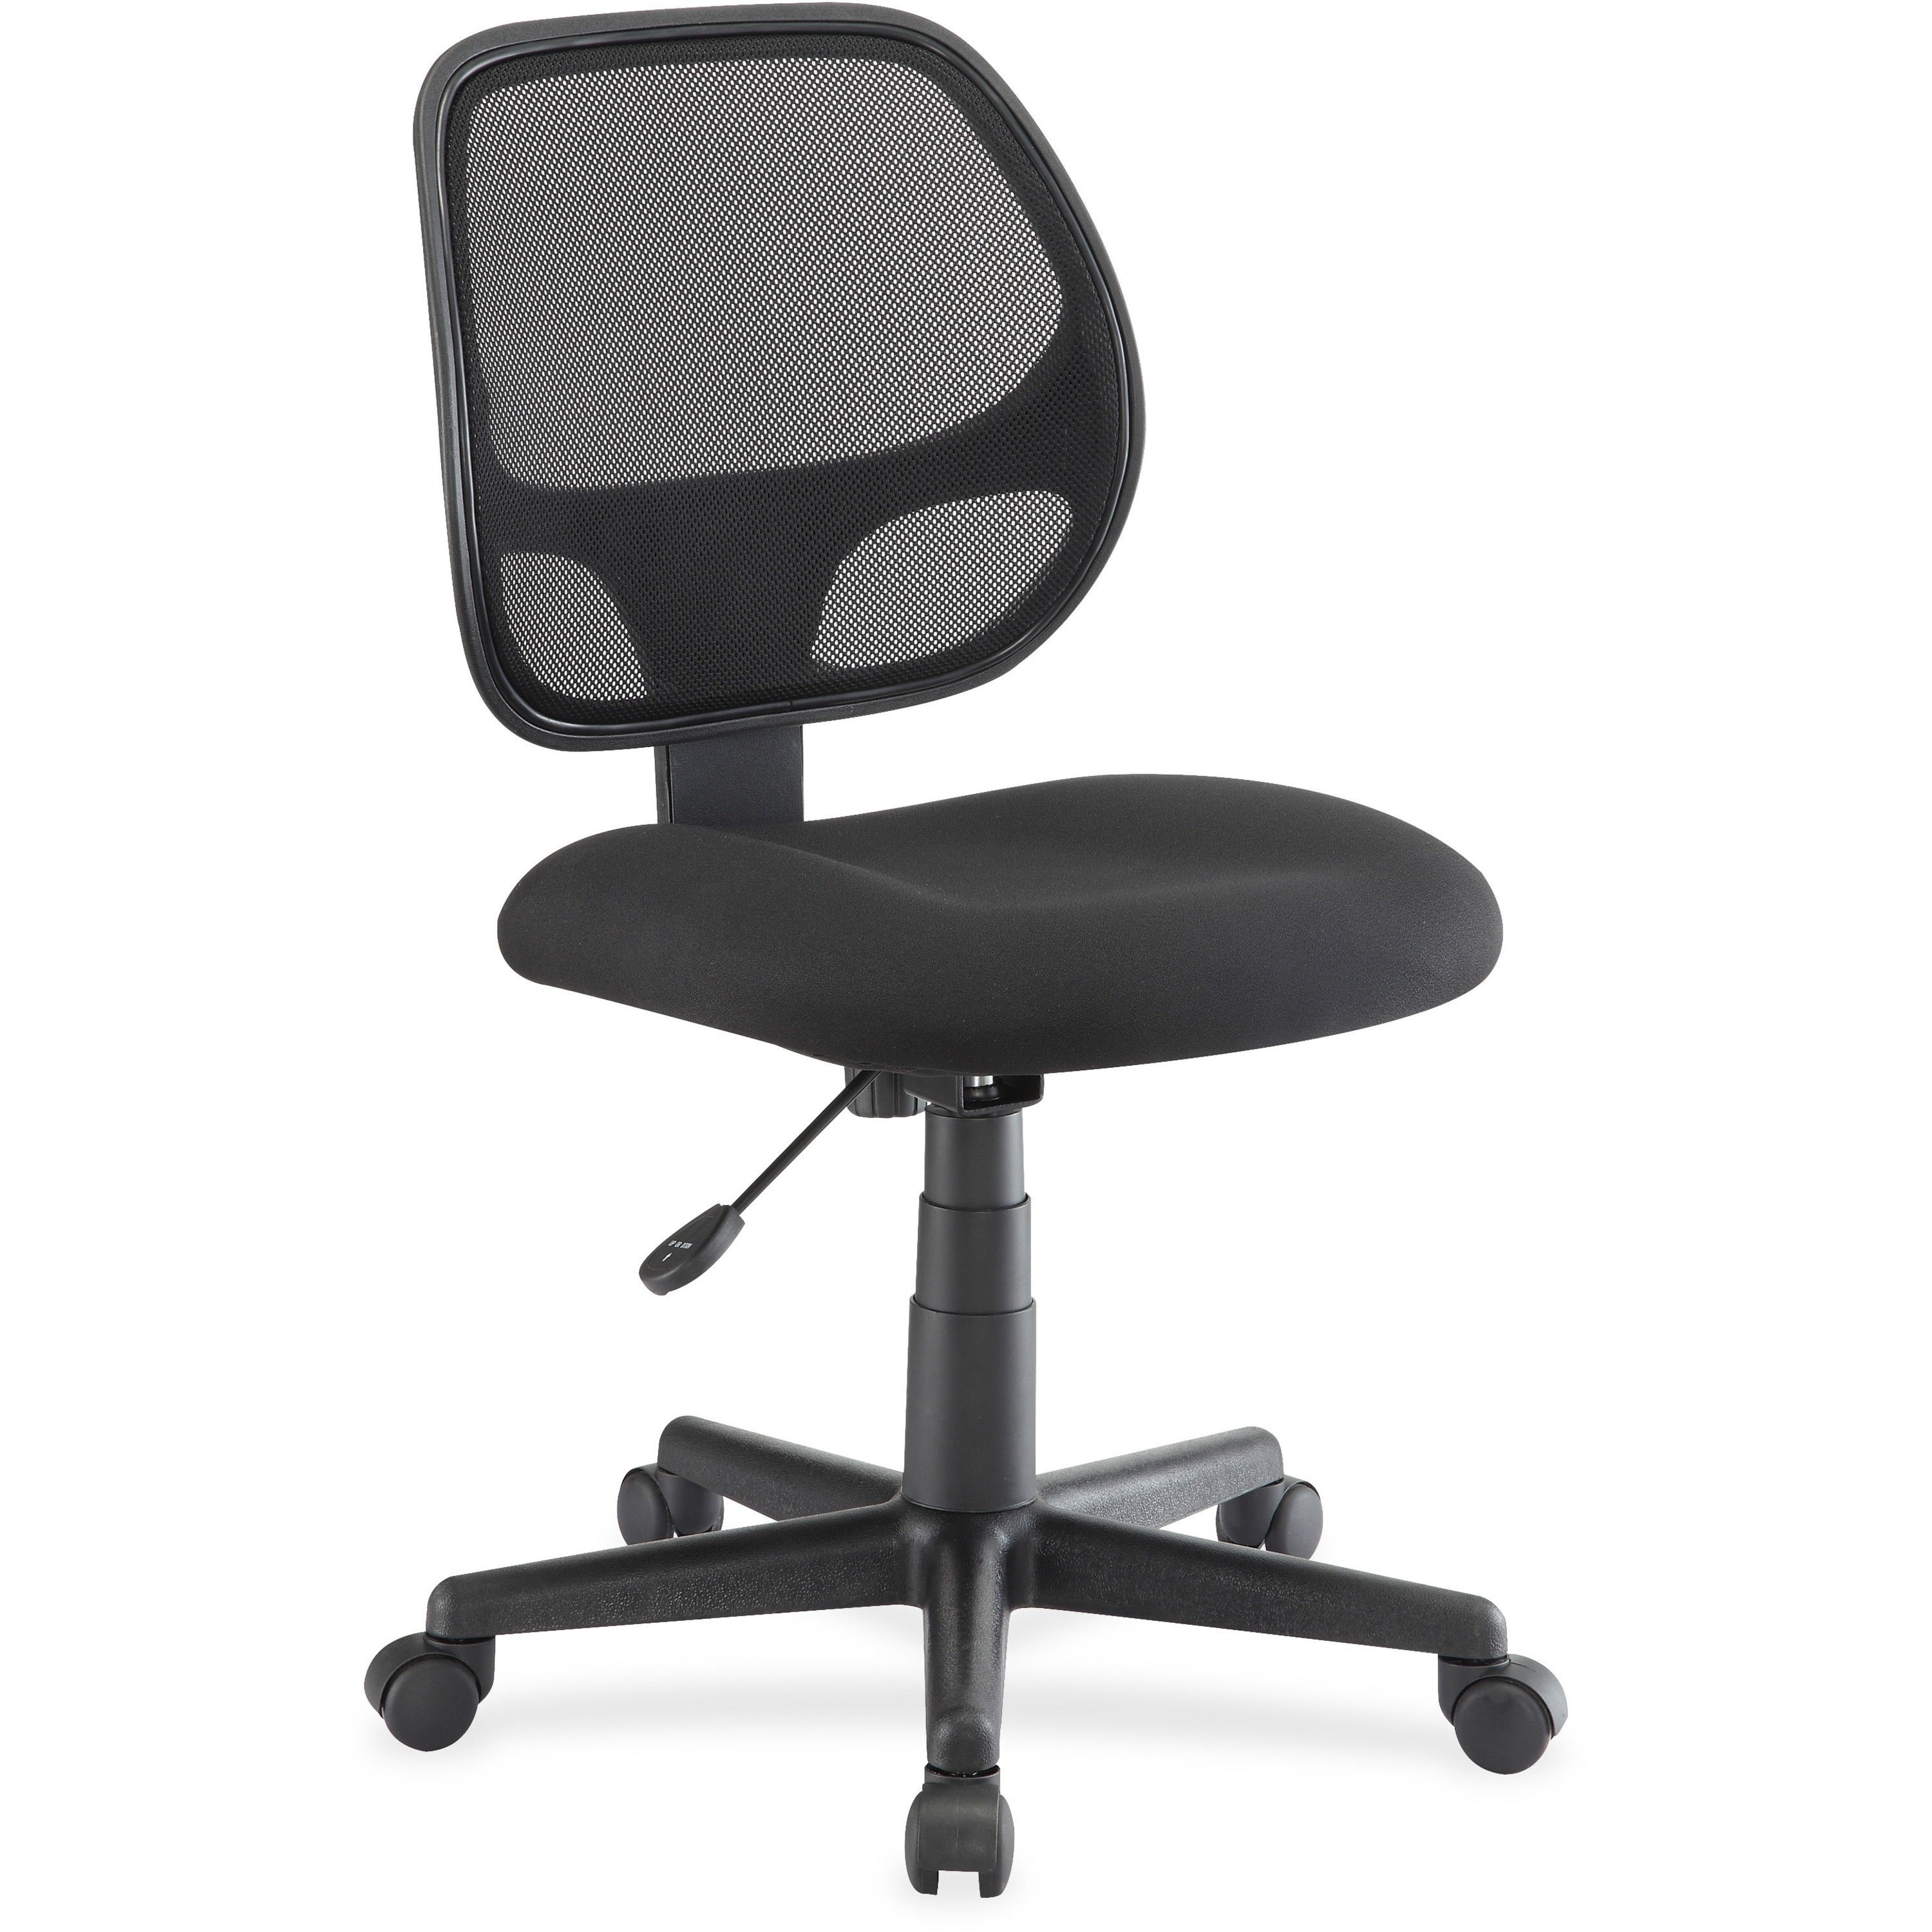 Lorell Multi-task Office Chair - Black Fabric Seat - Black Mesh Back - 5-star Base - Black - 1 Each - 